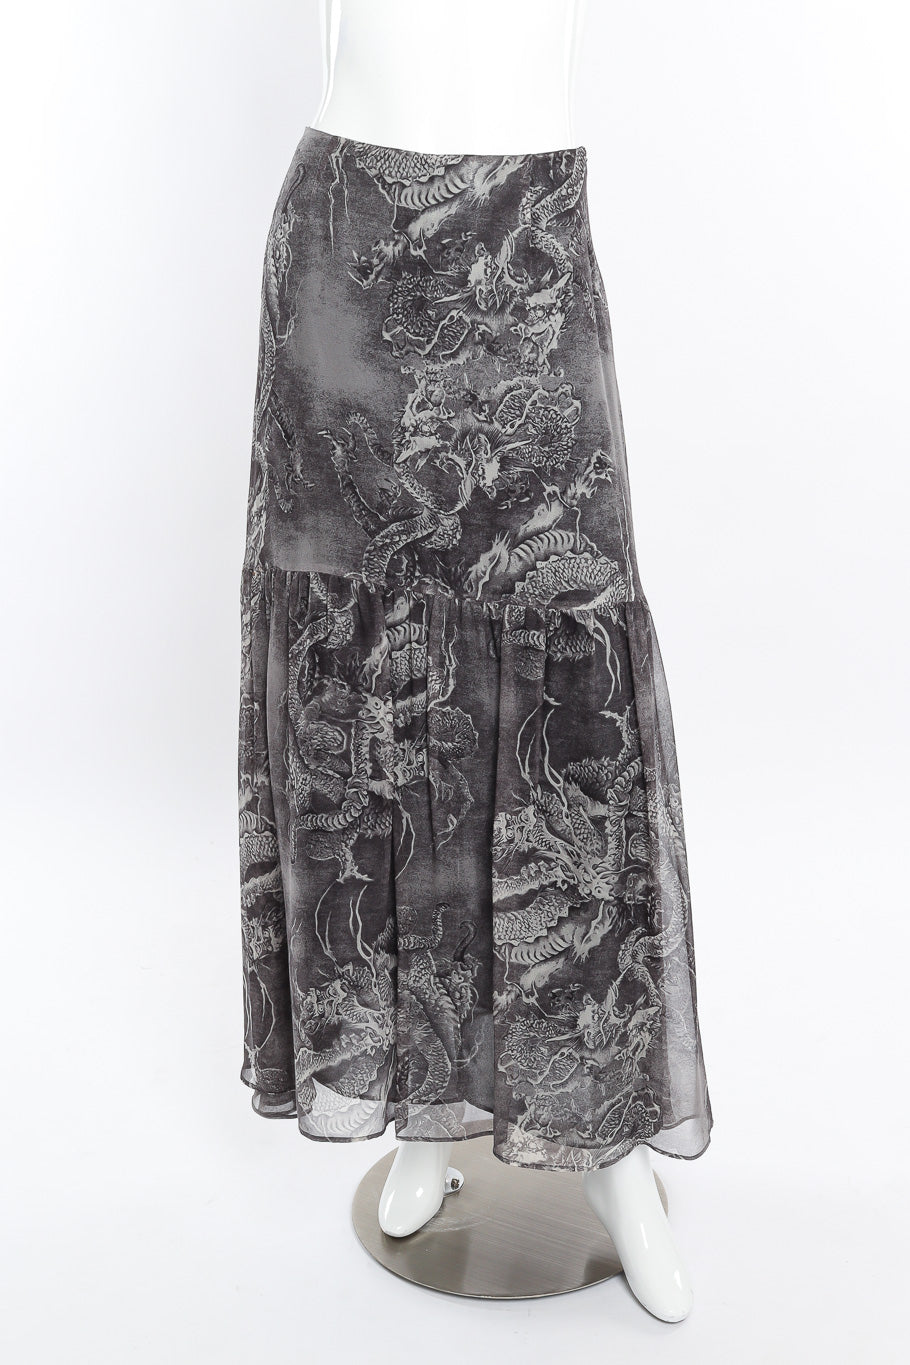 Kenzo Dragon Print Silk Skirt front view on mannequin @Recessla